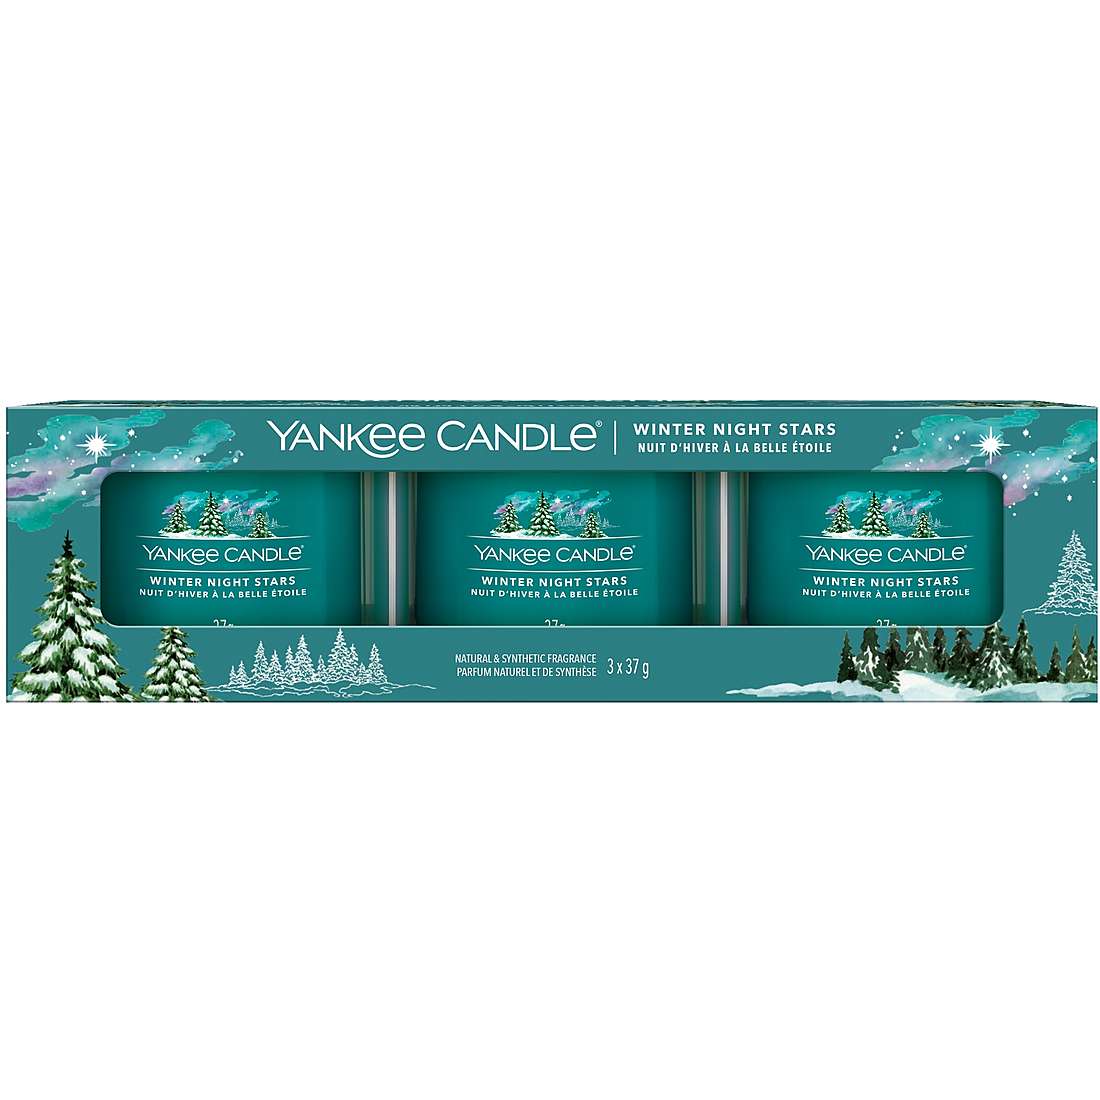 Candela Yankee Candle Box Regalo Snow Globe Wonderland colore Verde 1721624E